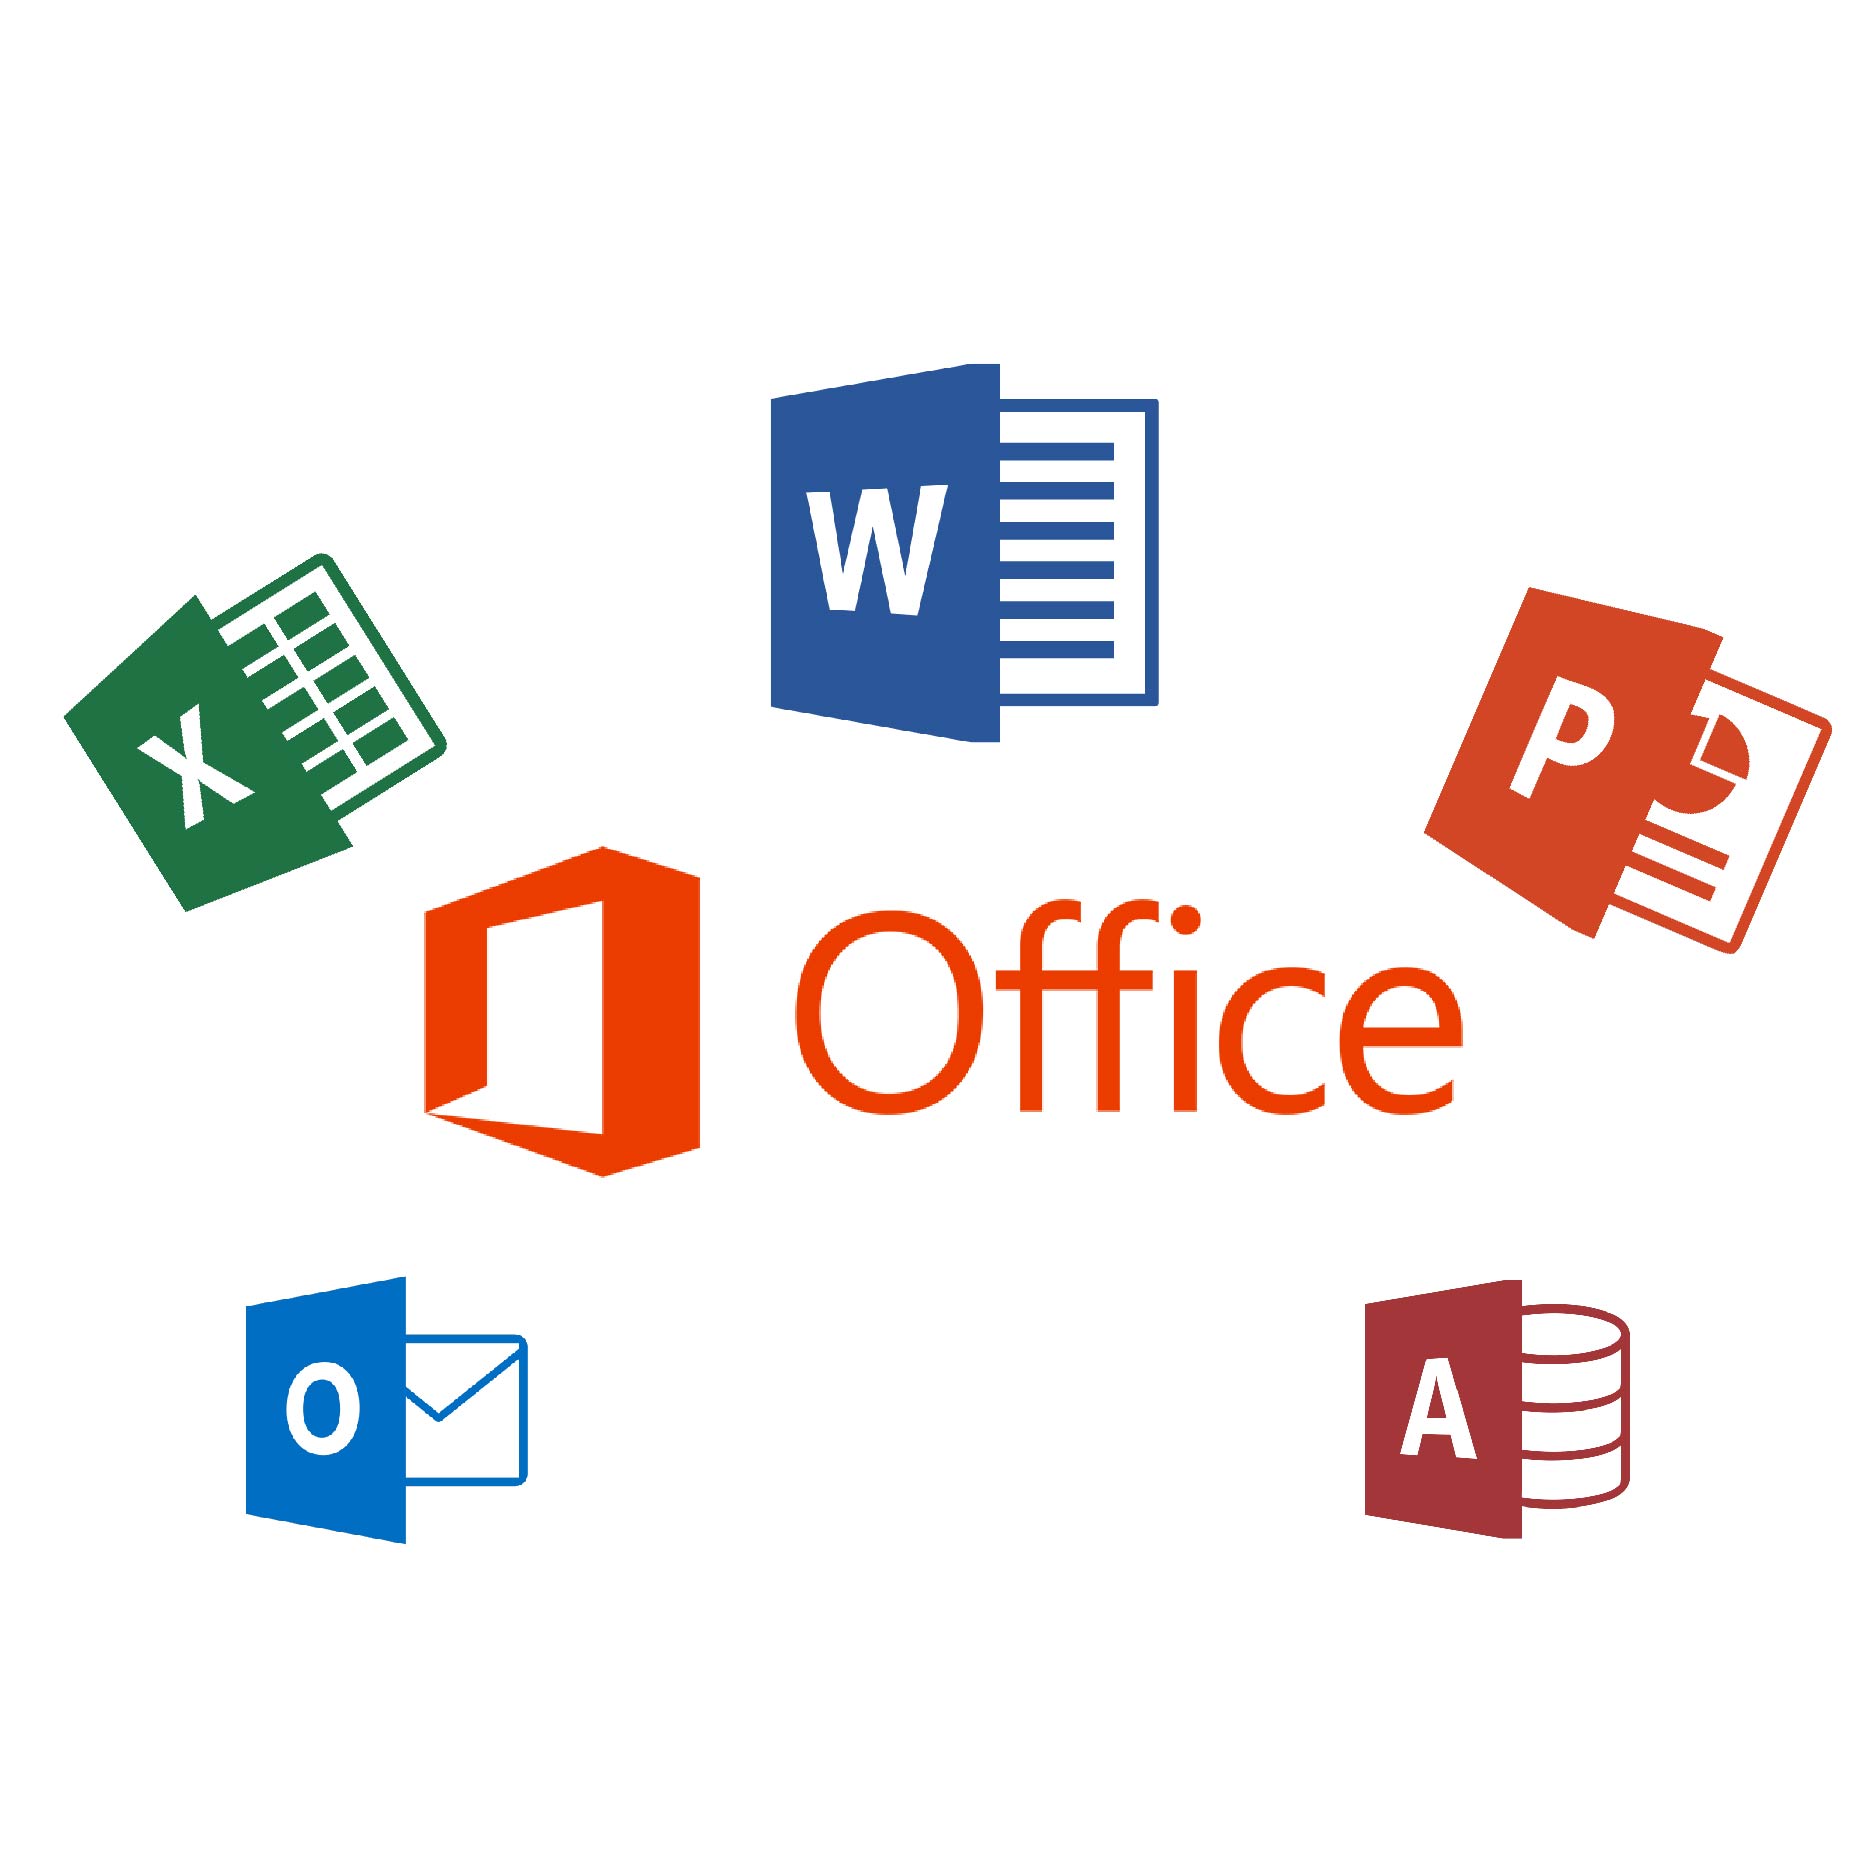 Microsoft Office (Complete Training - Beginner to Expert Level)